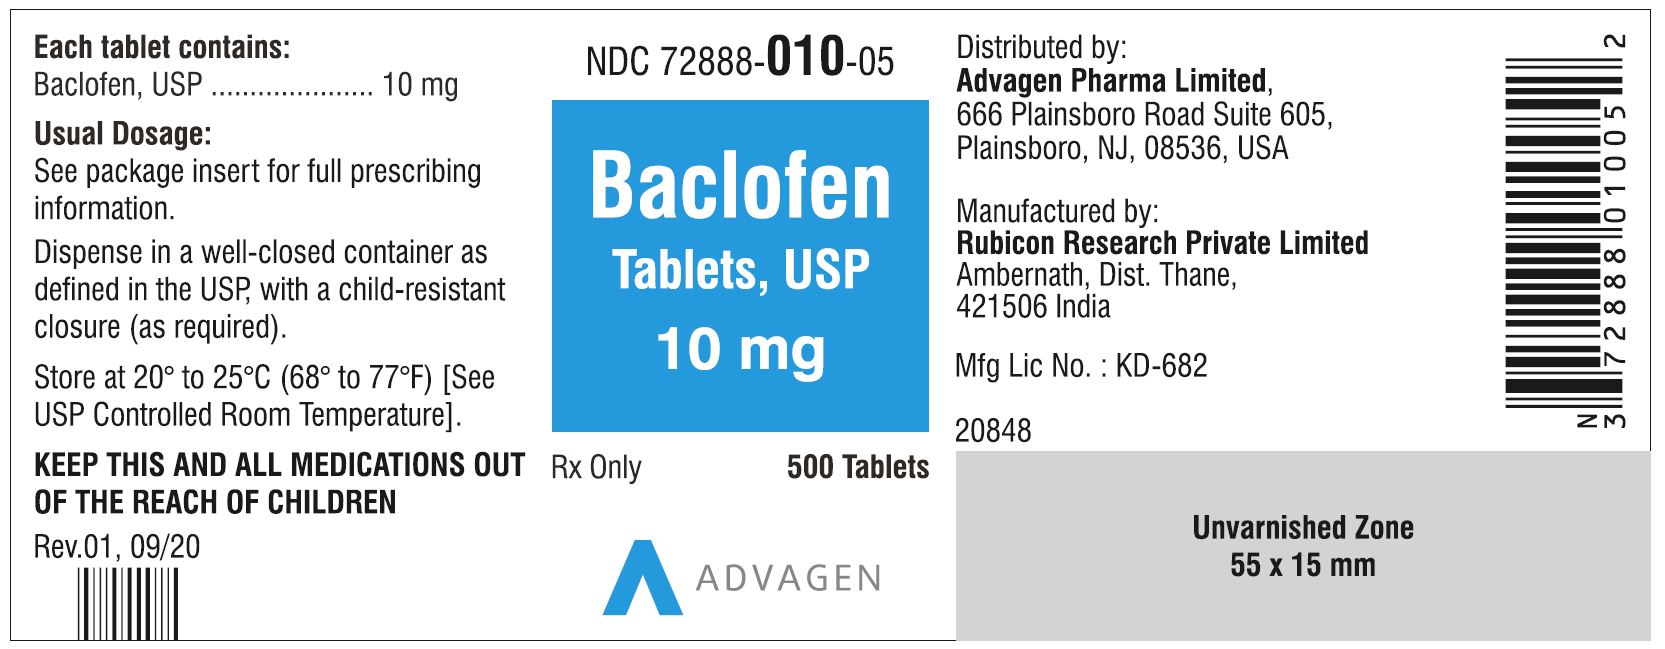 NDC 72888-010-05 - Baclofen Tablets, USP 10 mg - 500 Tablets